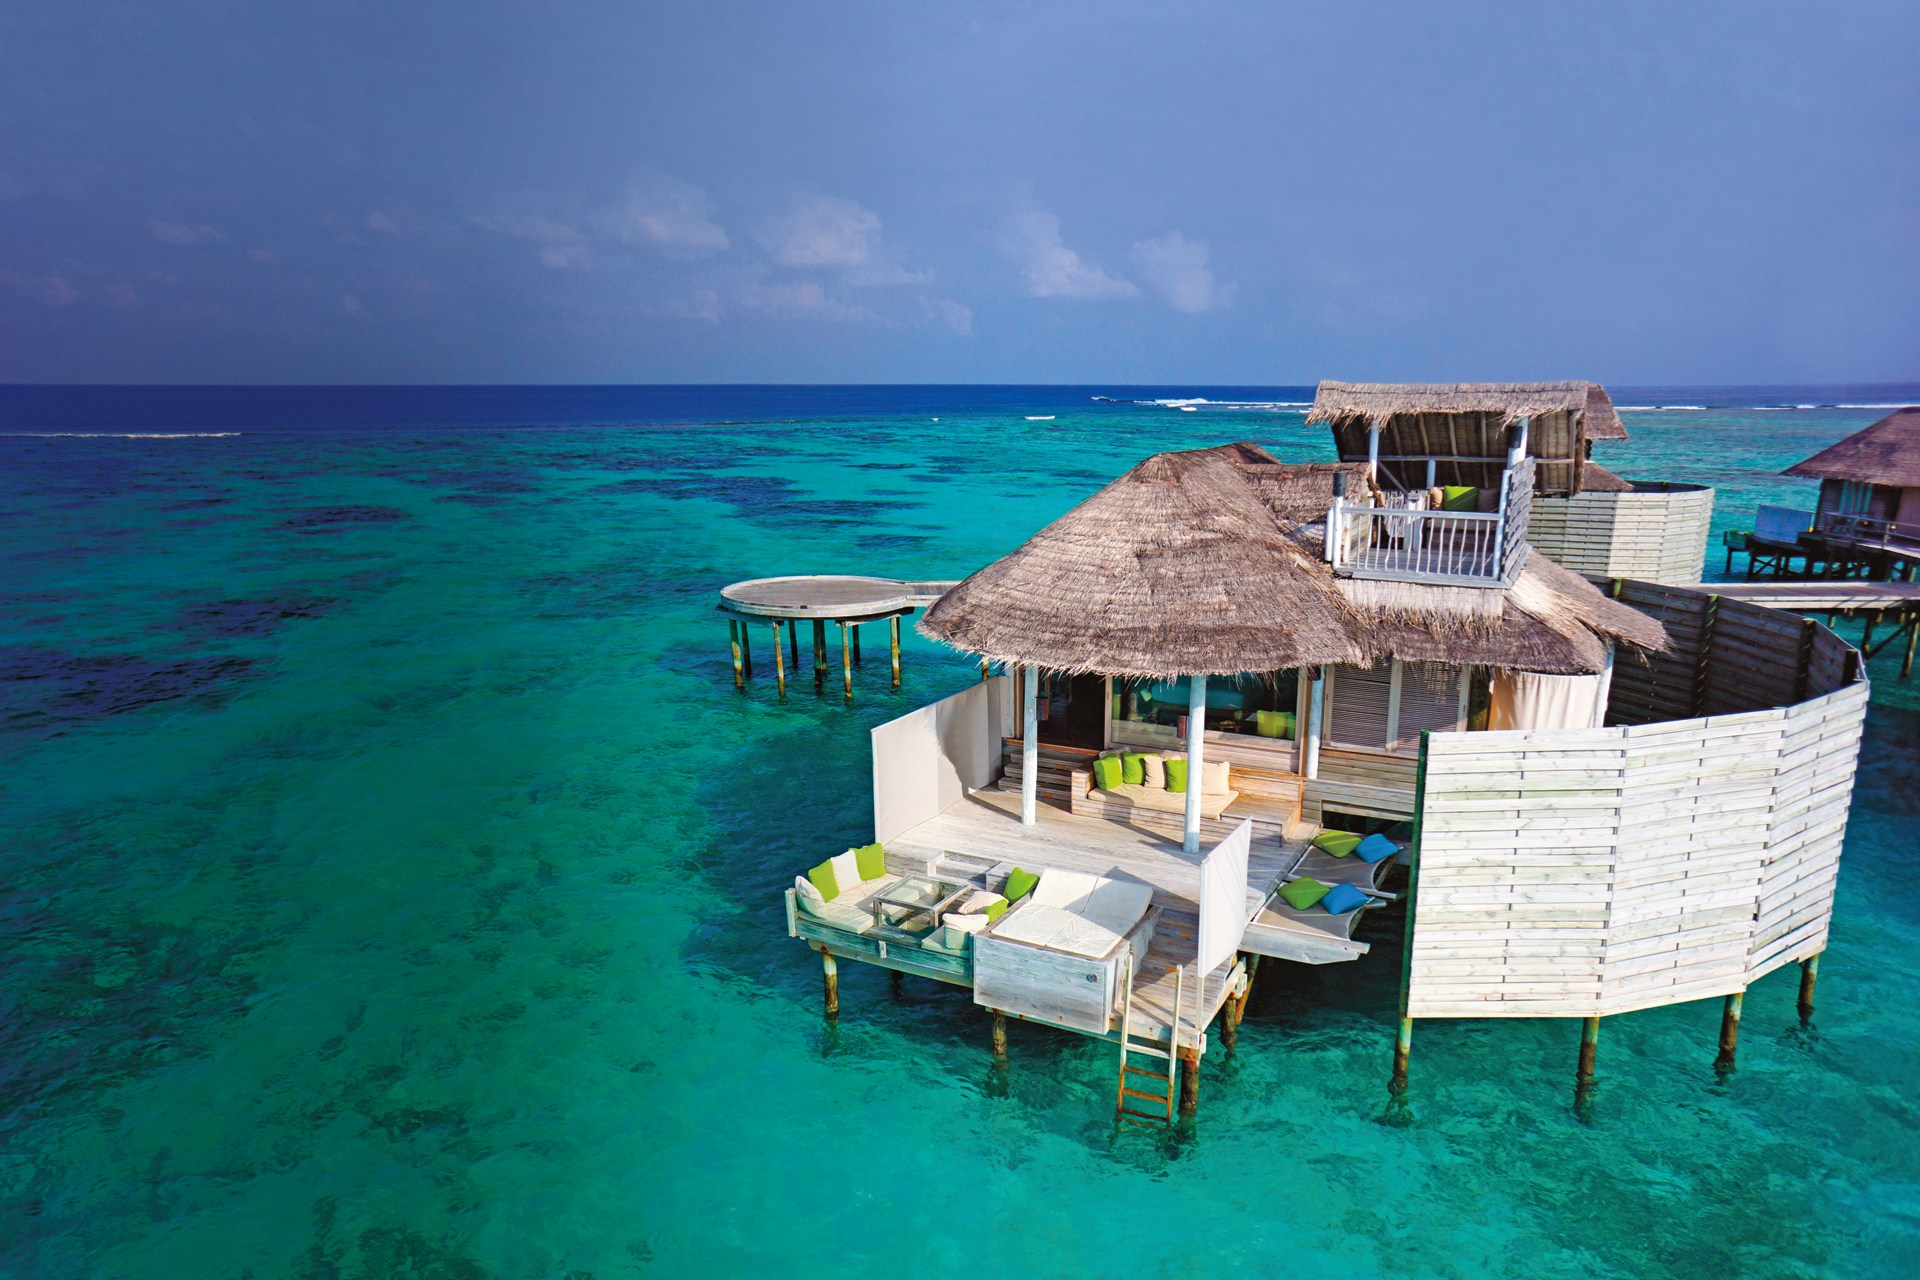 du-lich-maldives-mua-nao-dep-nhat-worldtrip